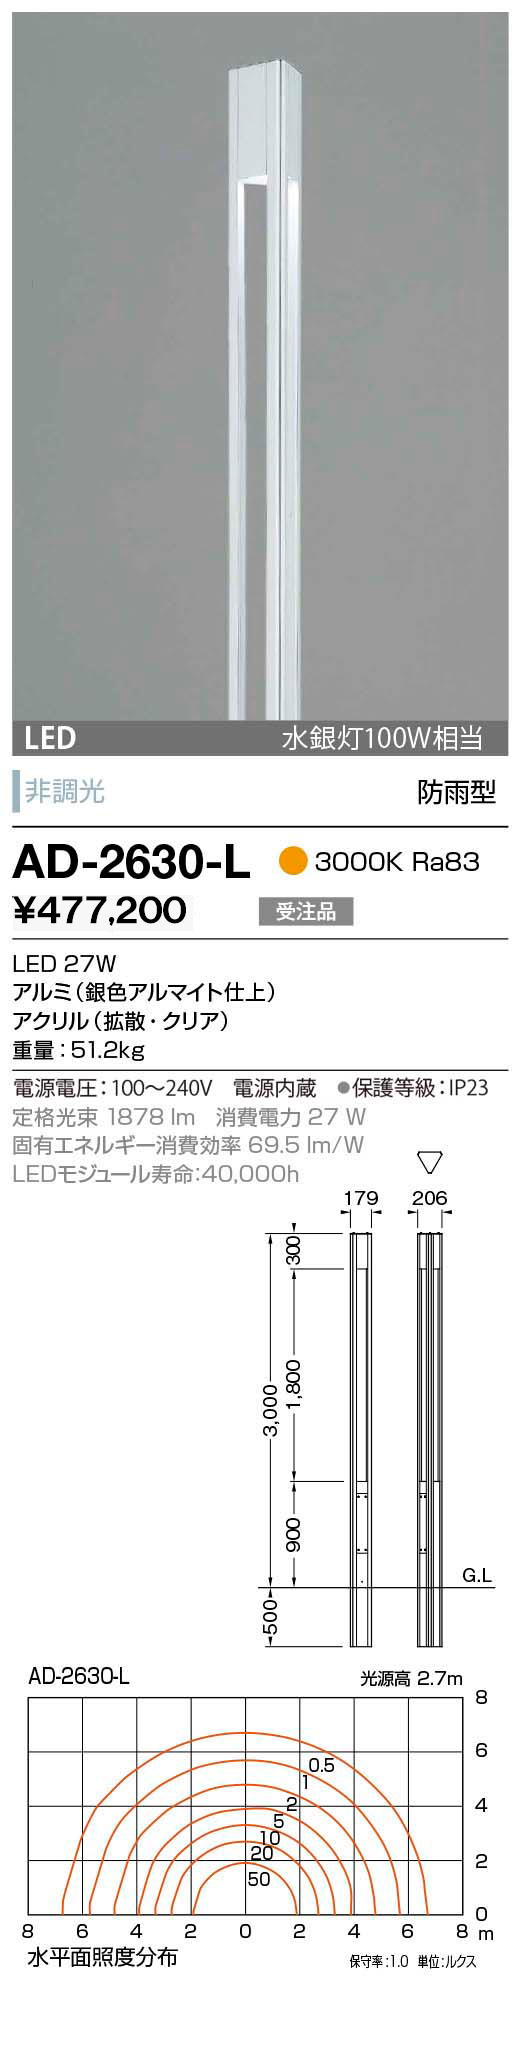 AD-2665-L 山田照明 ガーデンライト 黒色 LED（電球色） - 2